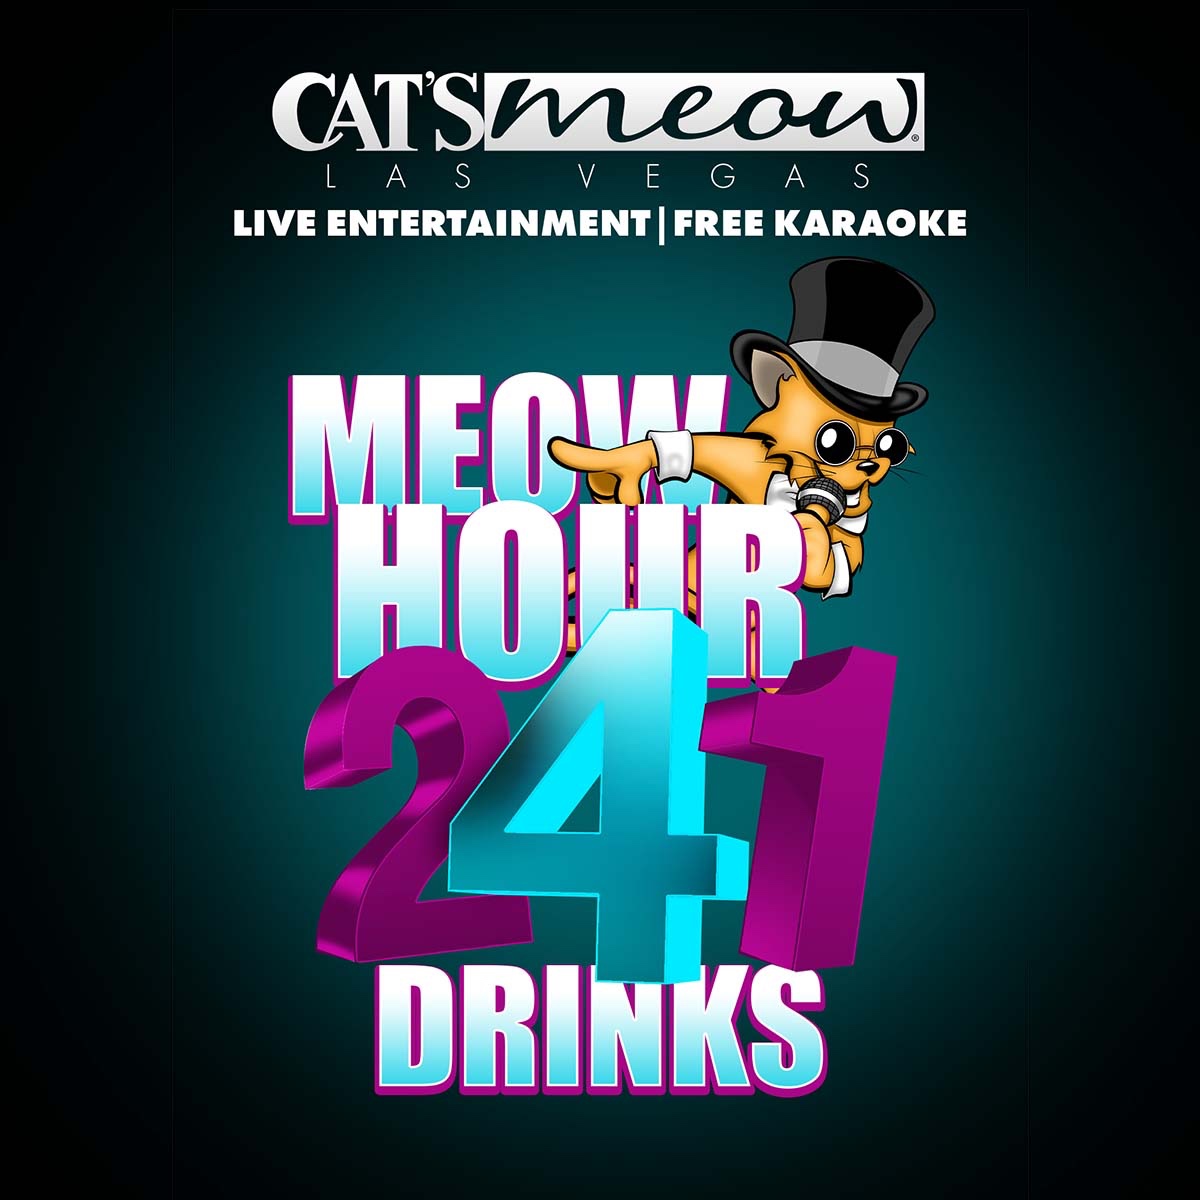 Join us for some fun tonight!  World-Famous #HappyHour with 2-FOR-1 DRINKS until 8PM!
.
.
.
#catskaraoke #karaoke #lasvegas #fremontstreet #happyhour #drinks #entertainment #fun